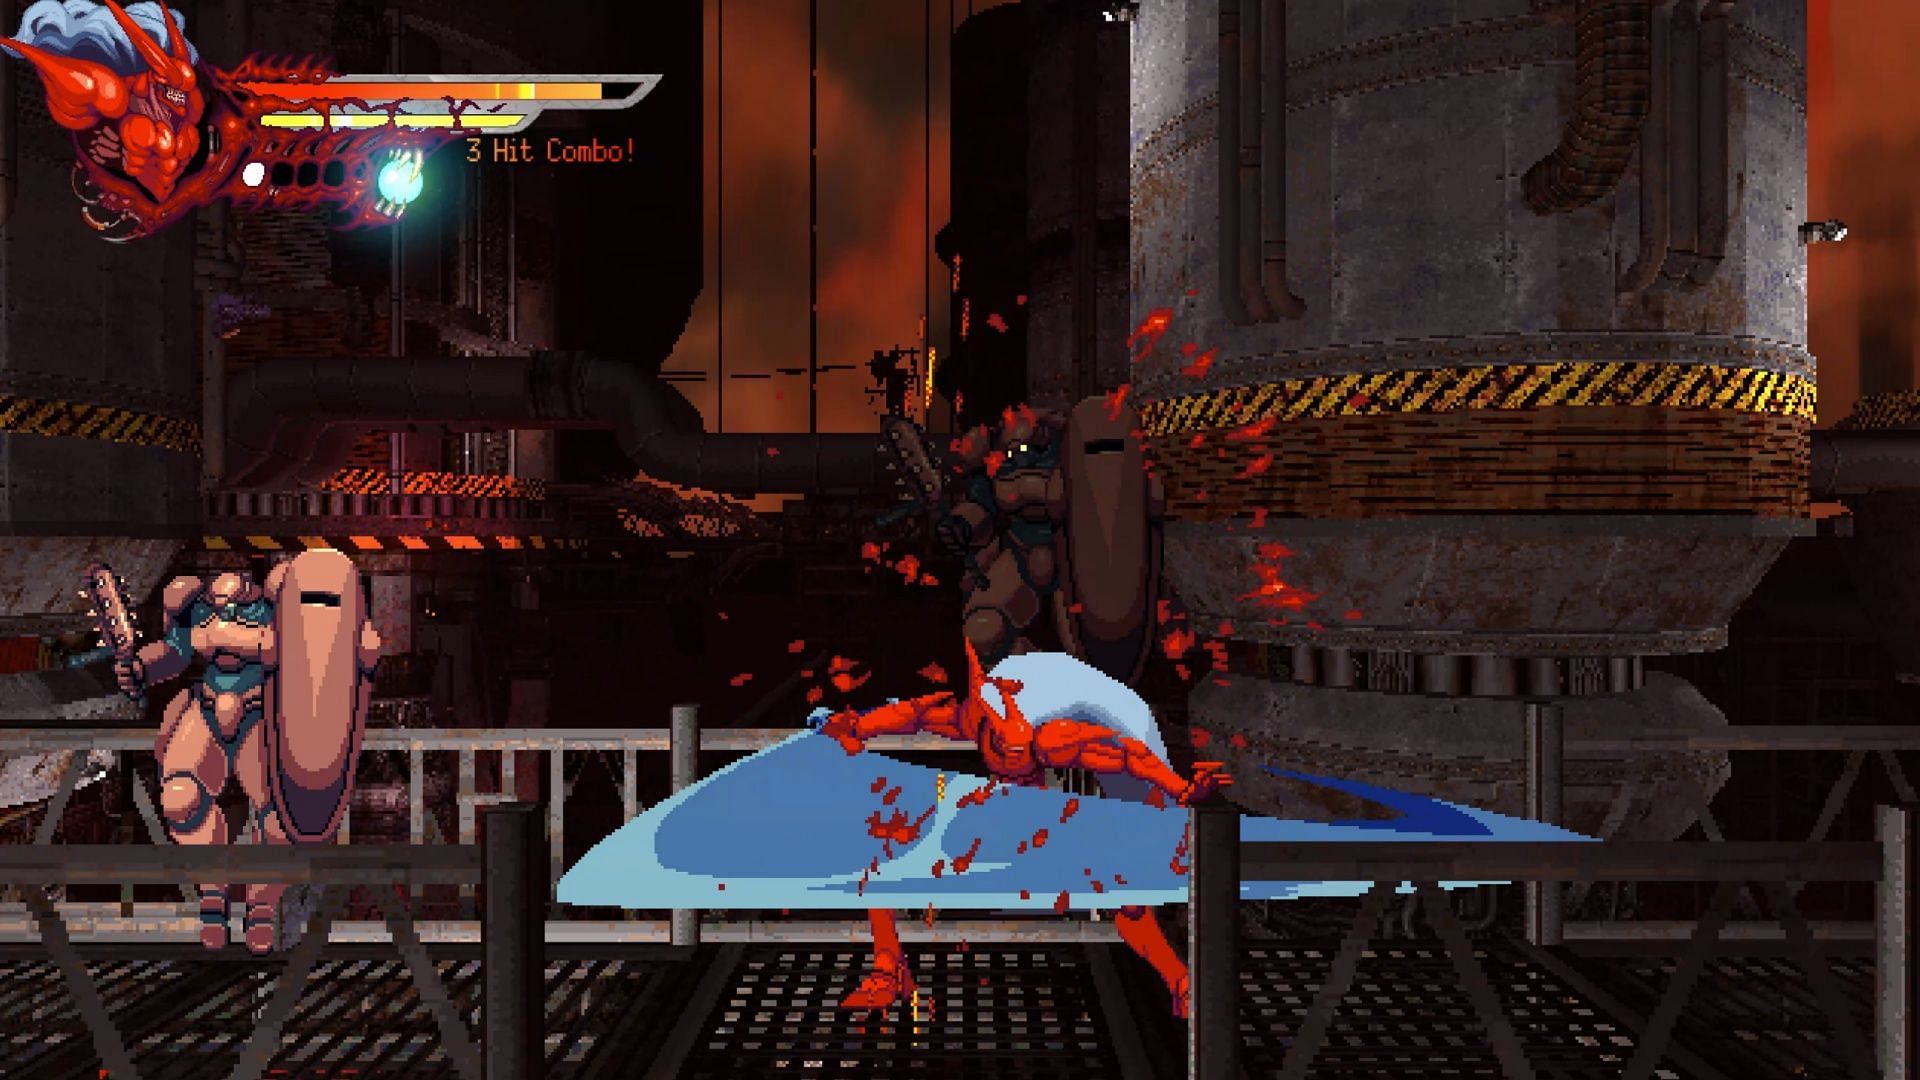 Dive kicks? Wall jumps? Sick sword attacks? This game brings the heat in battle (Image via Ziggurat)